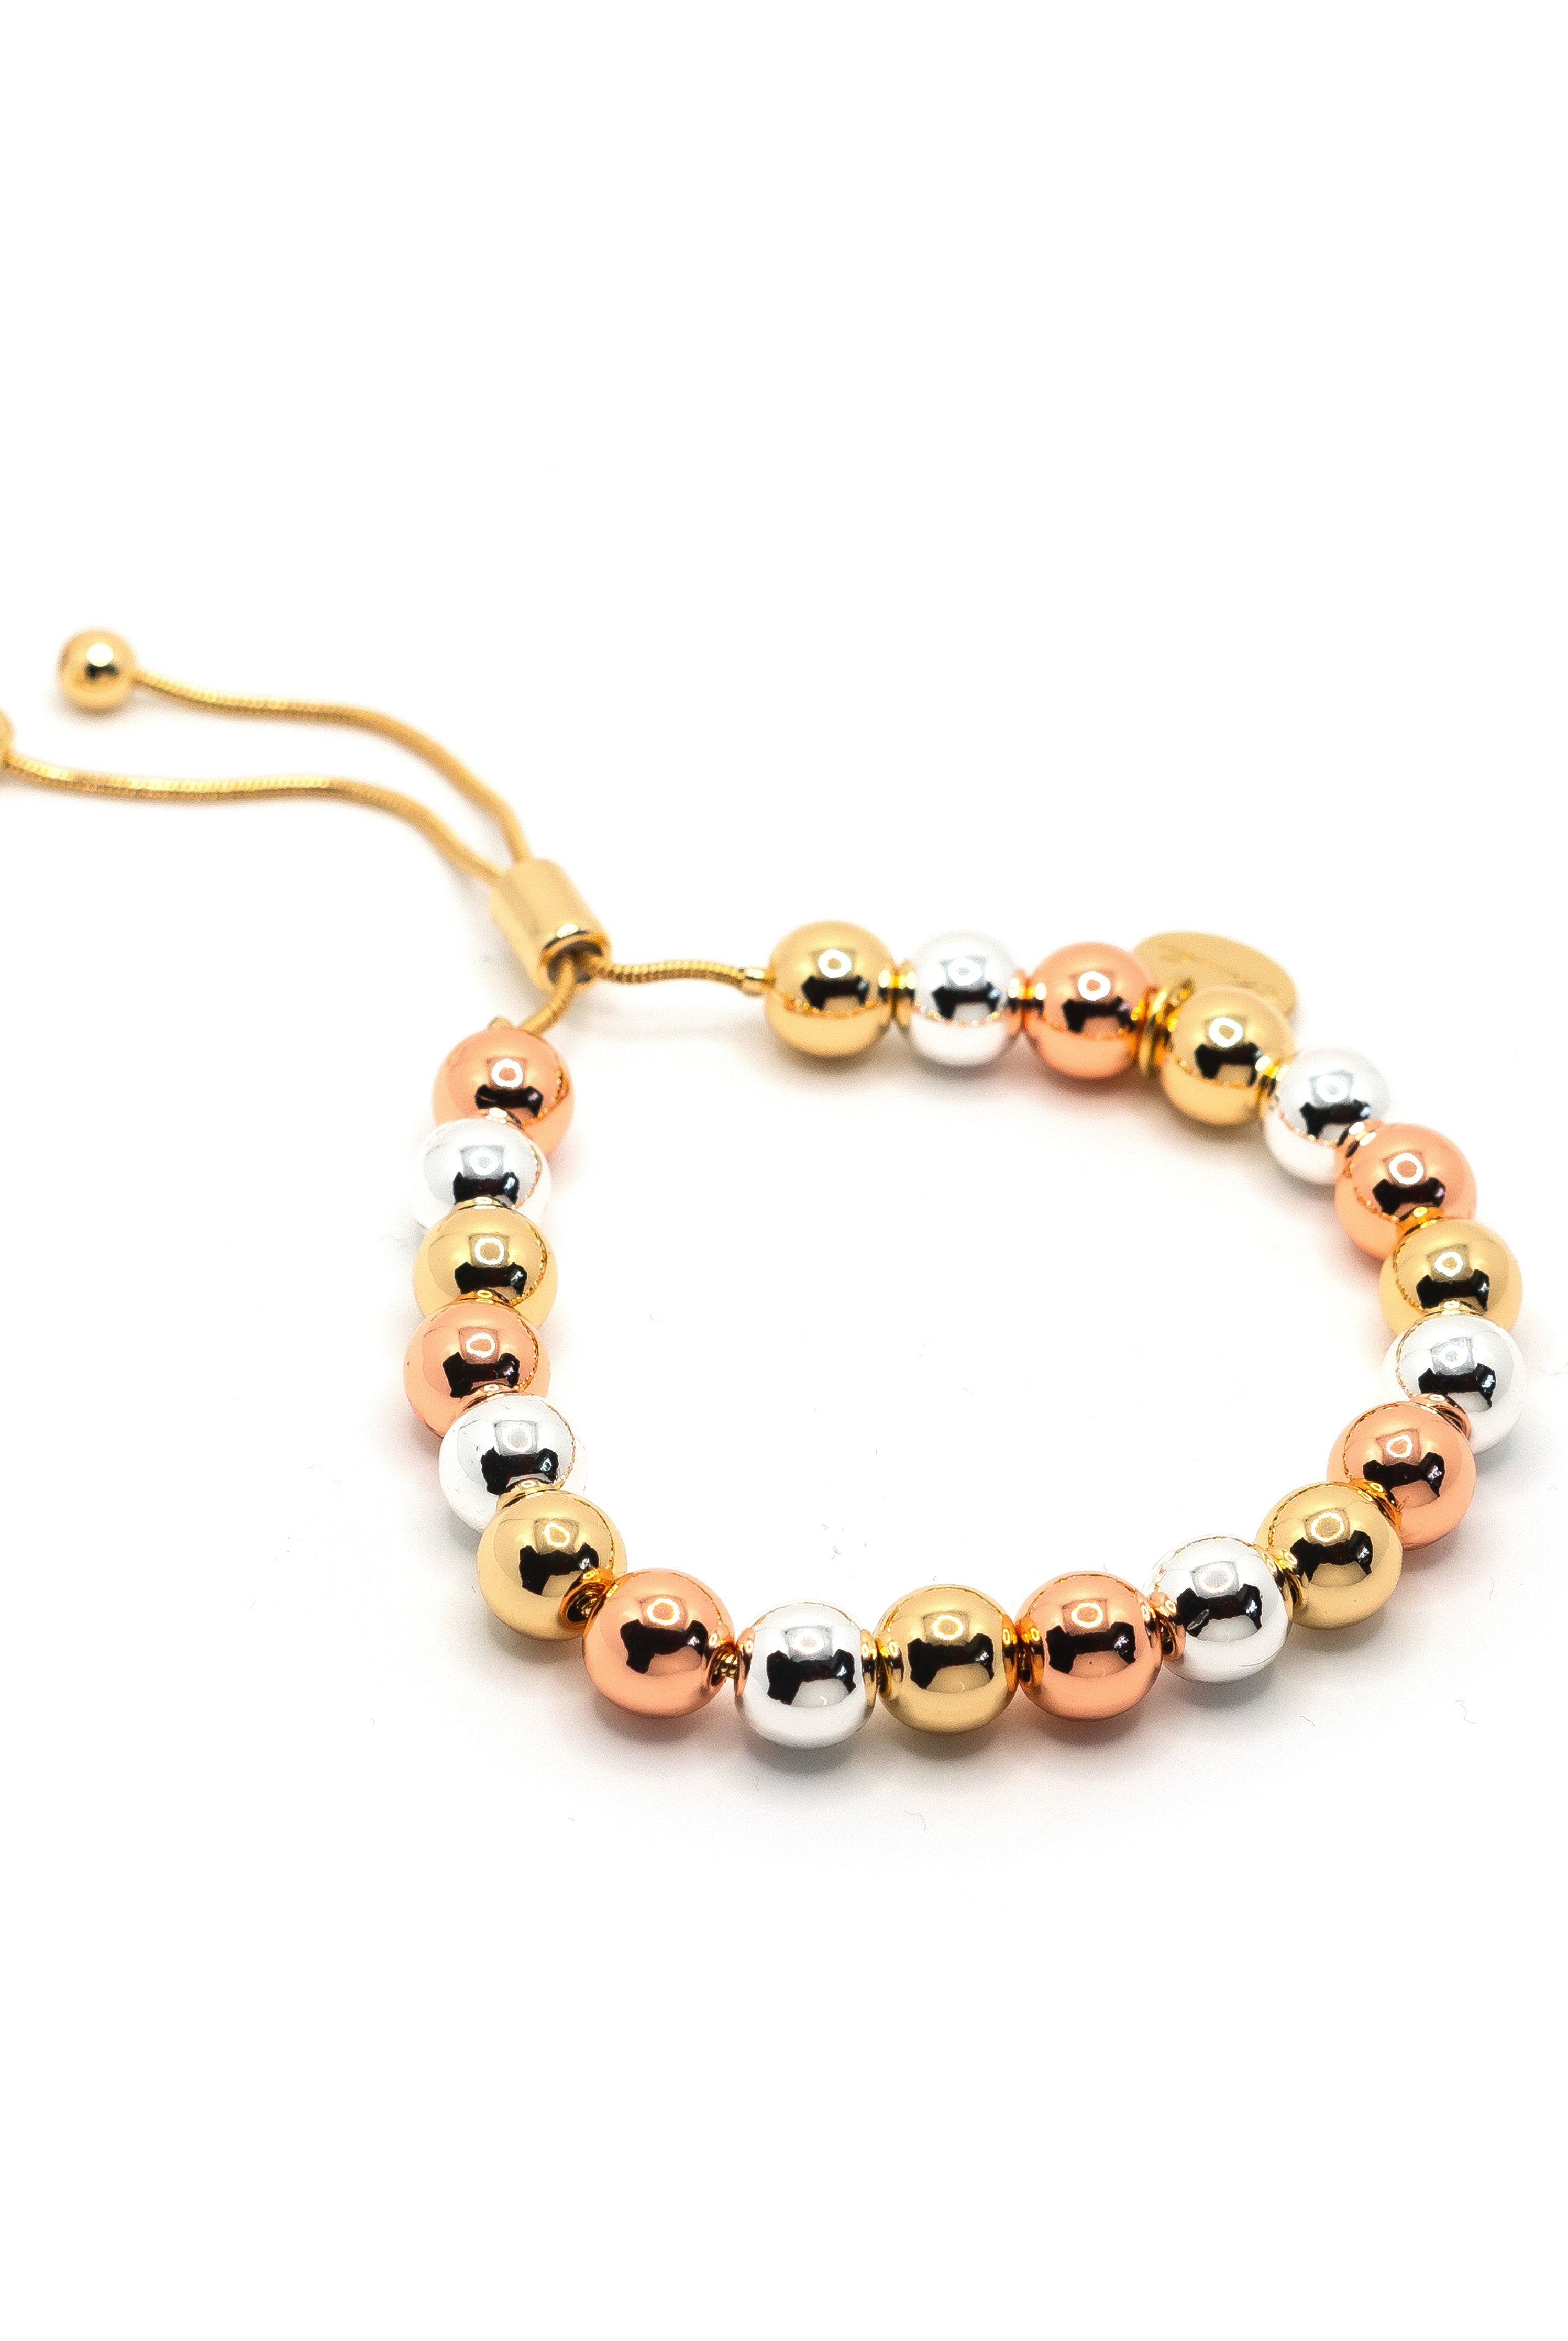 Tri Tone Adjustable Bracelet in 8mm-Bracelets-The Sis Kiss®-Urban Threadz Boutique, Women's Fashion Boutique in Saugatuck, MI